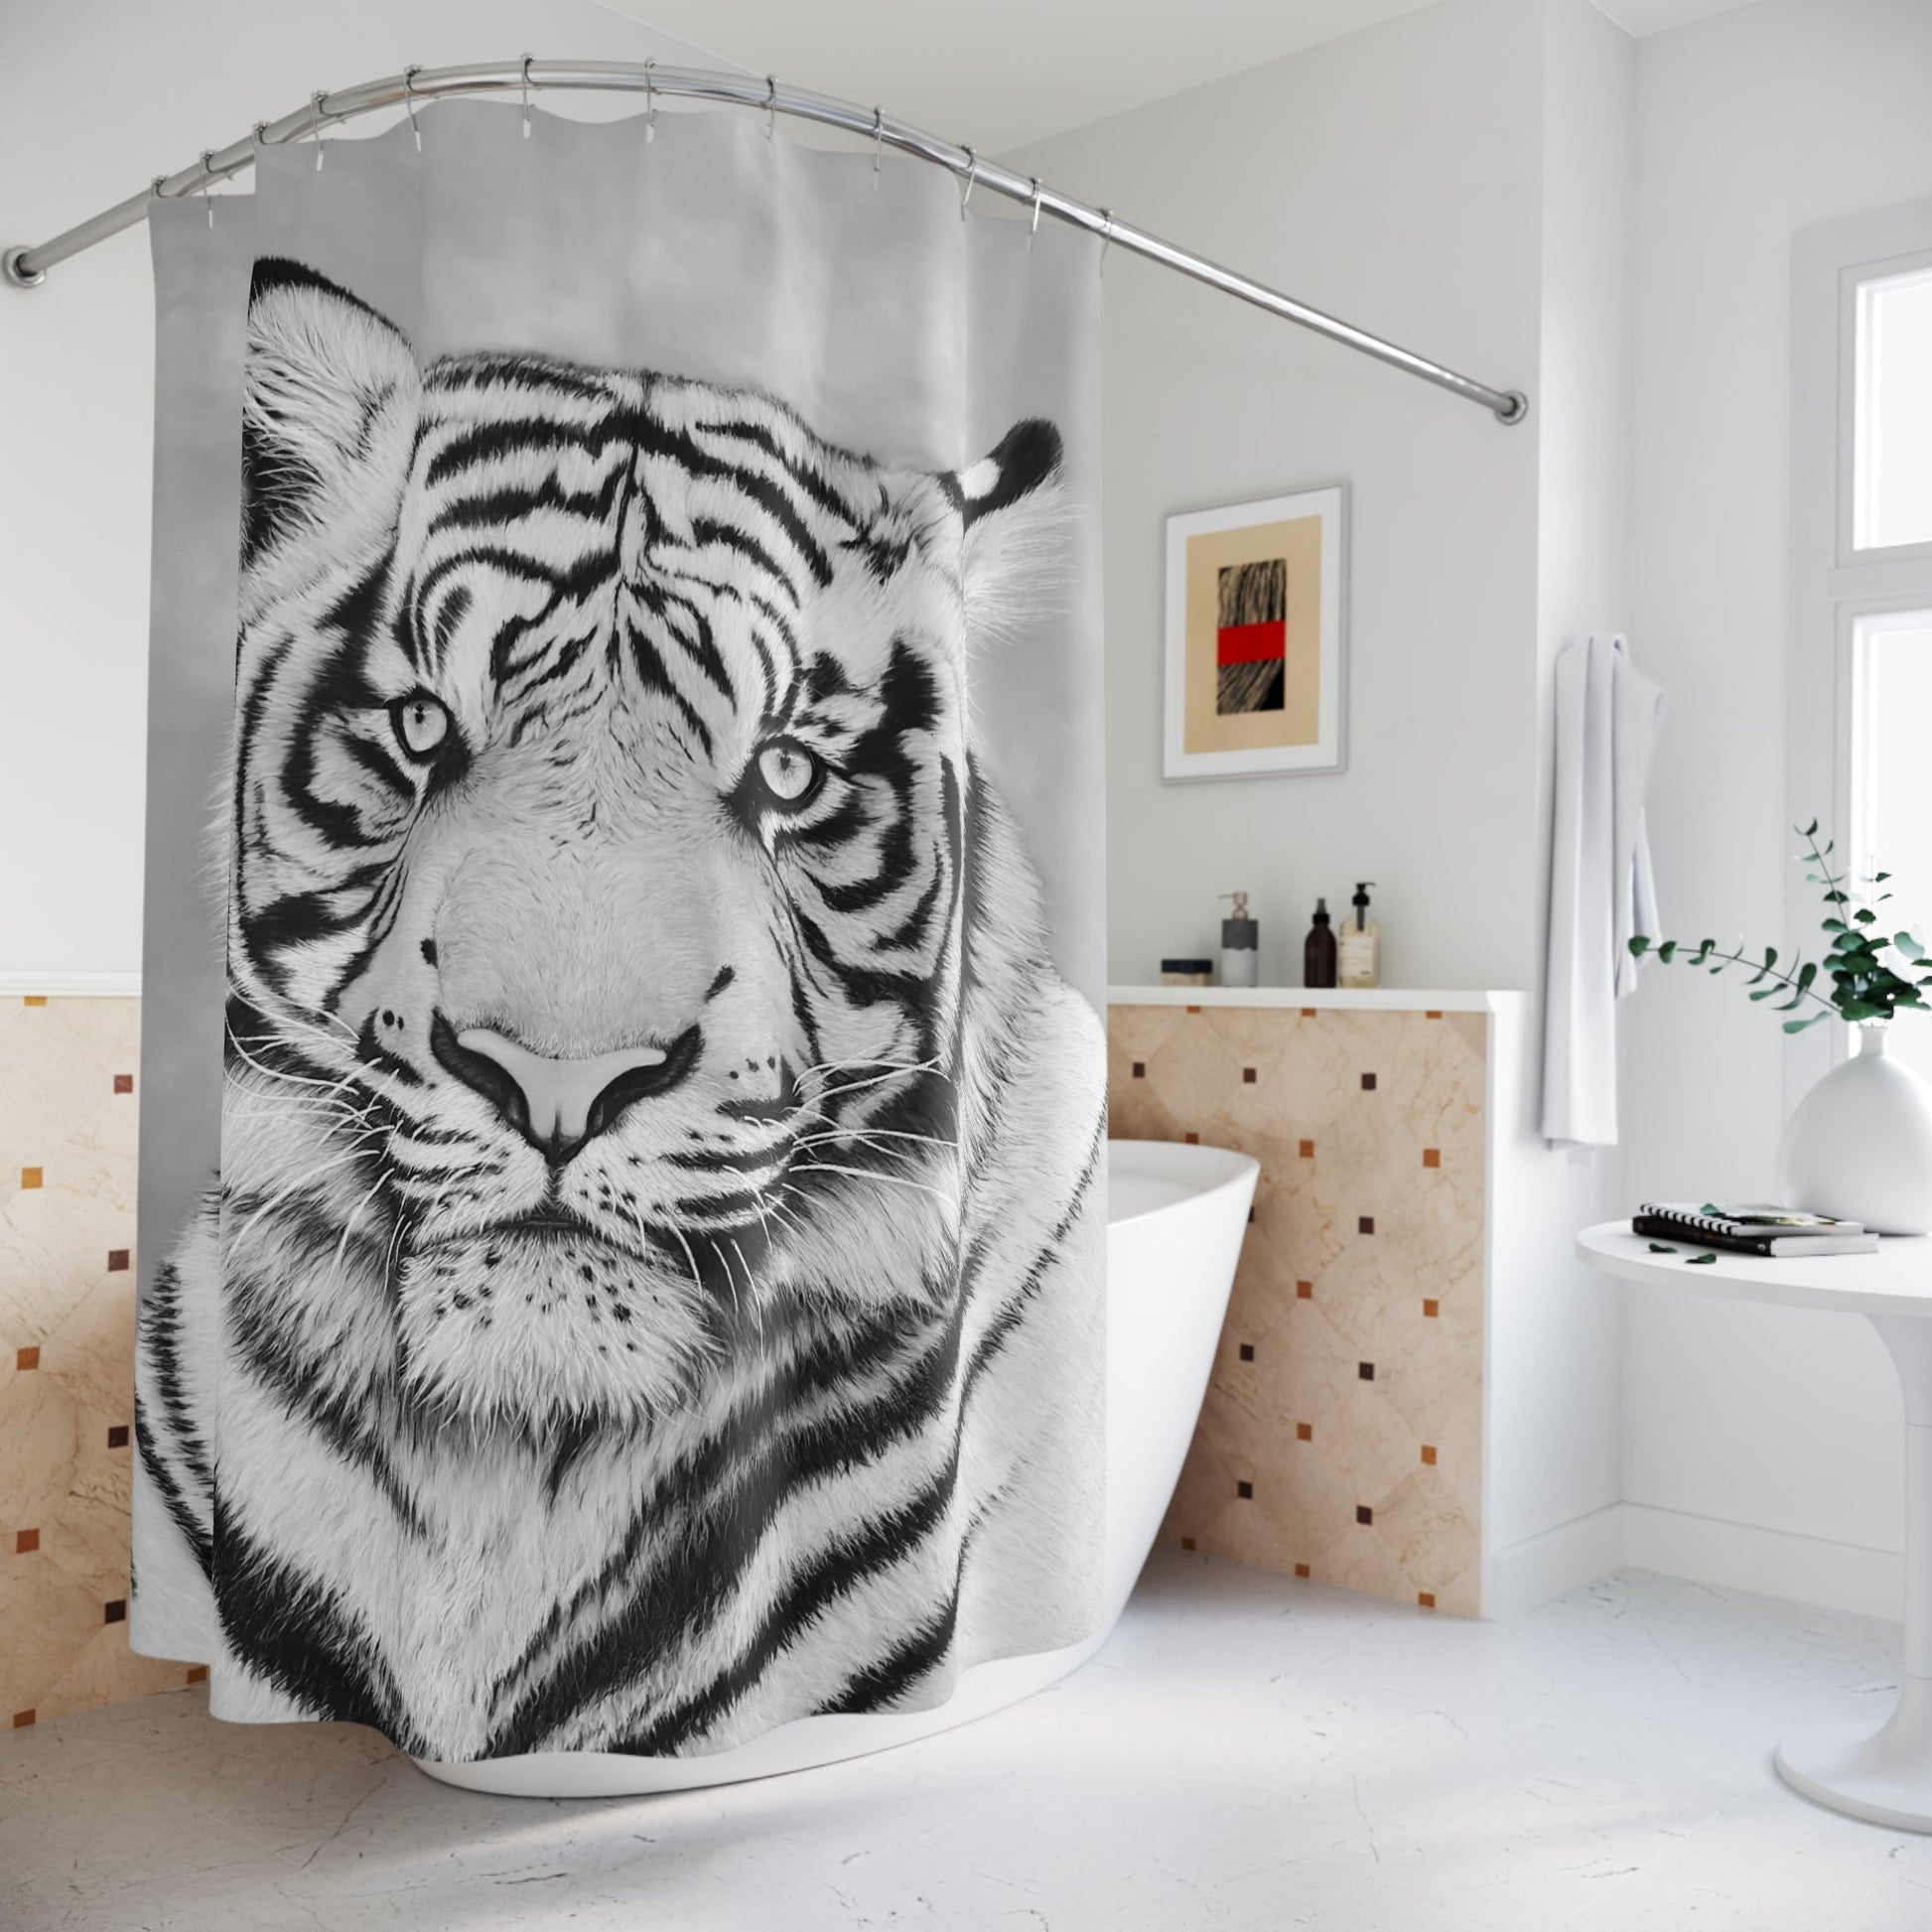 Shower Curtain - "MONOCHROME TIGER"